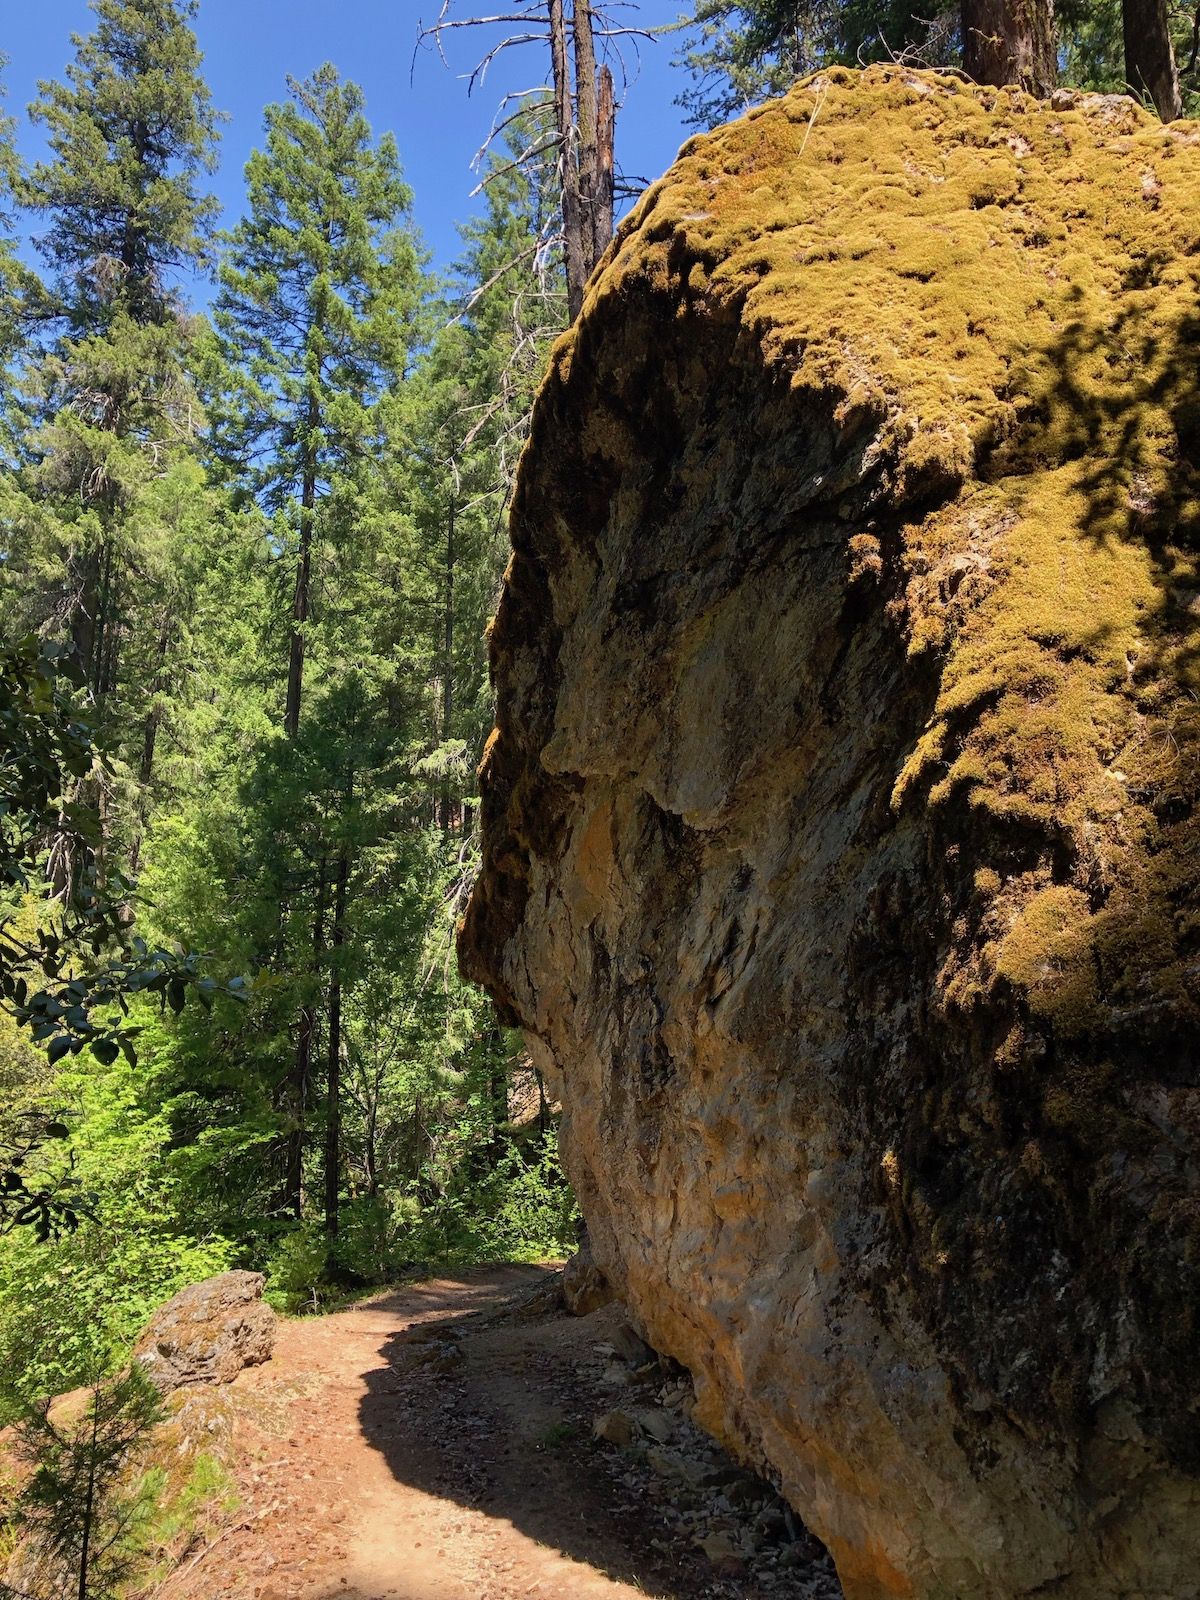 A big rock along the trail.